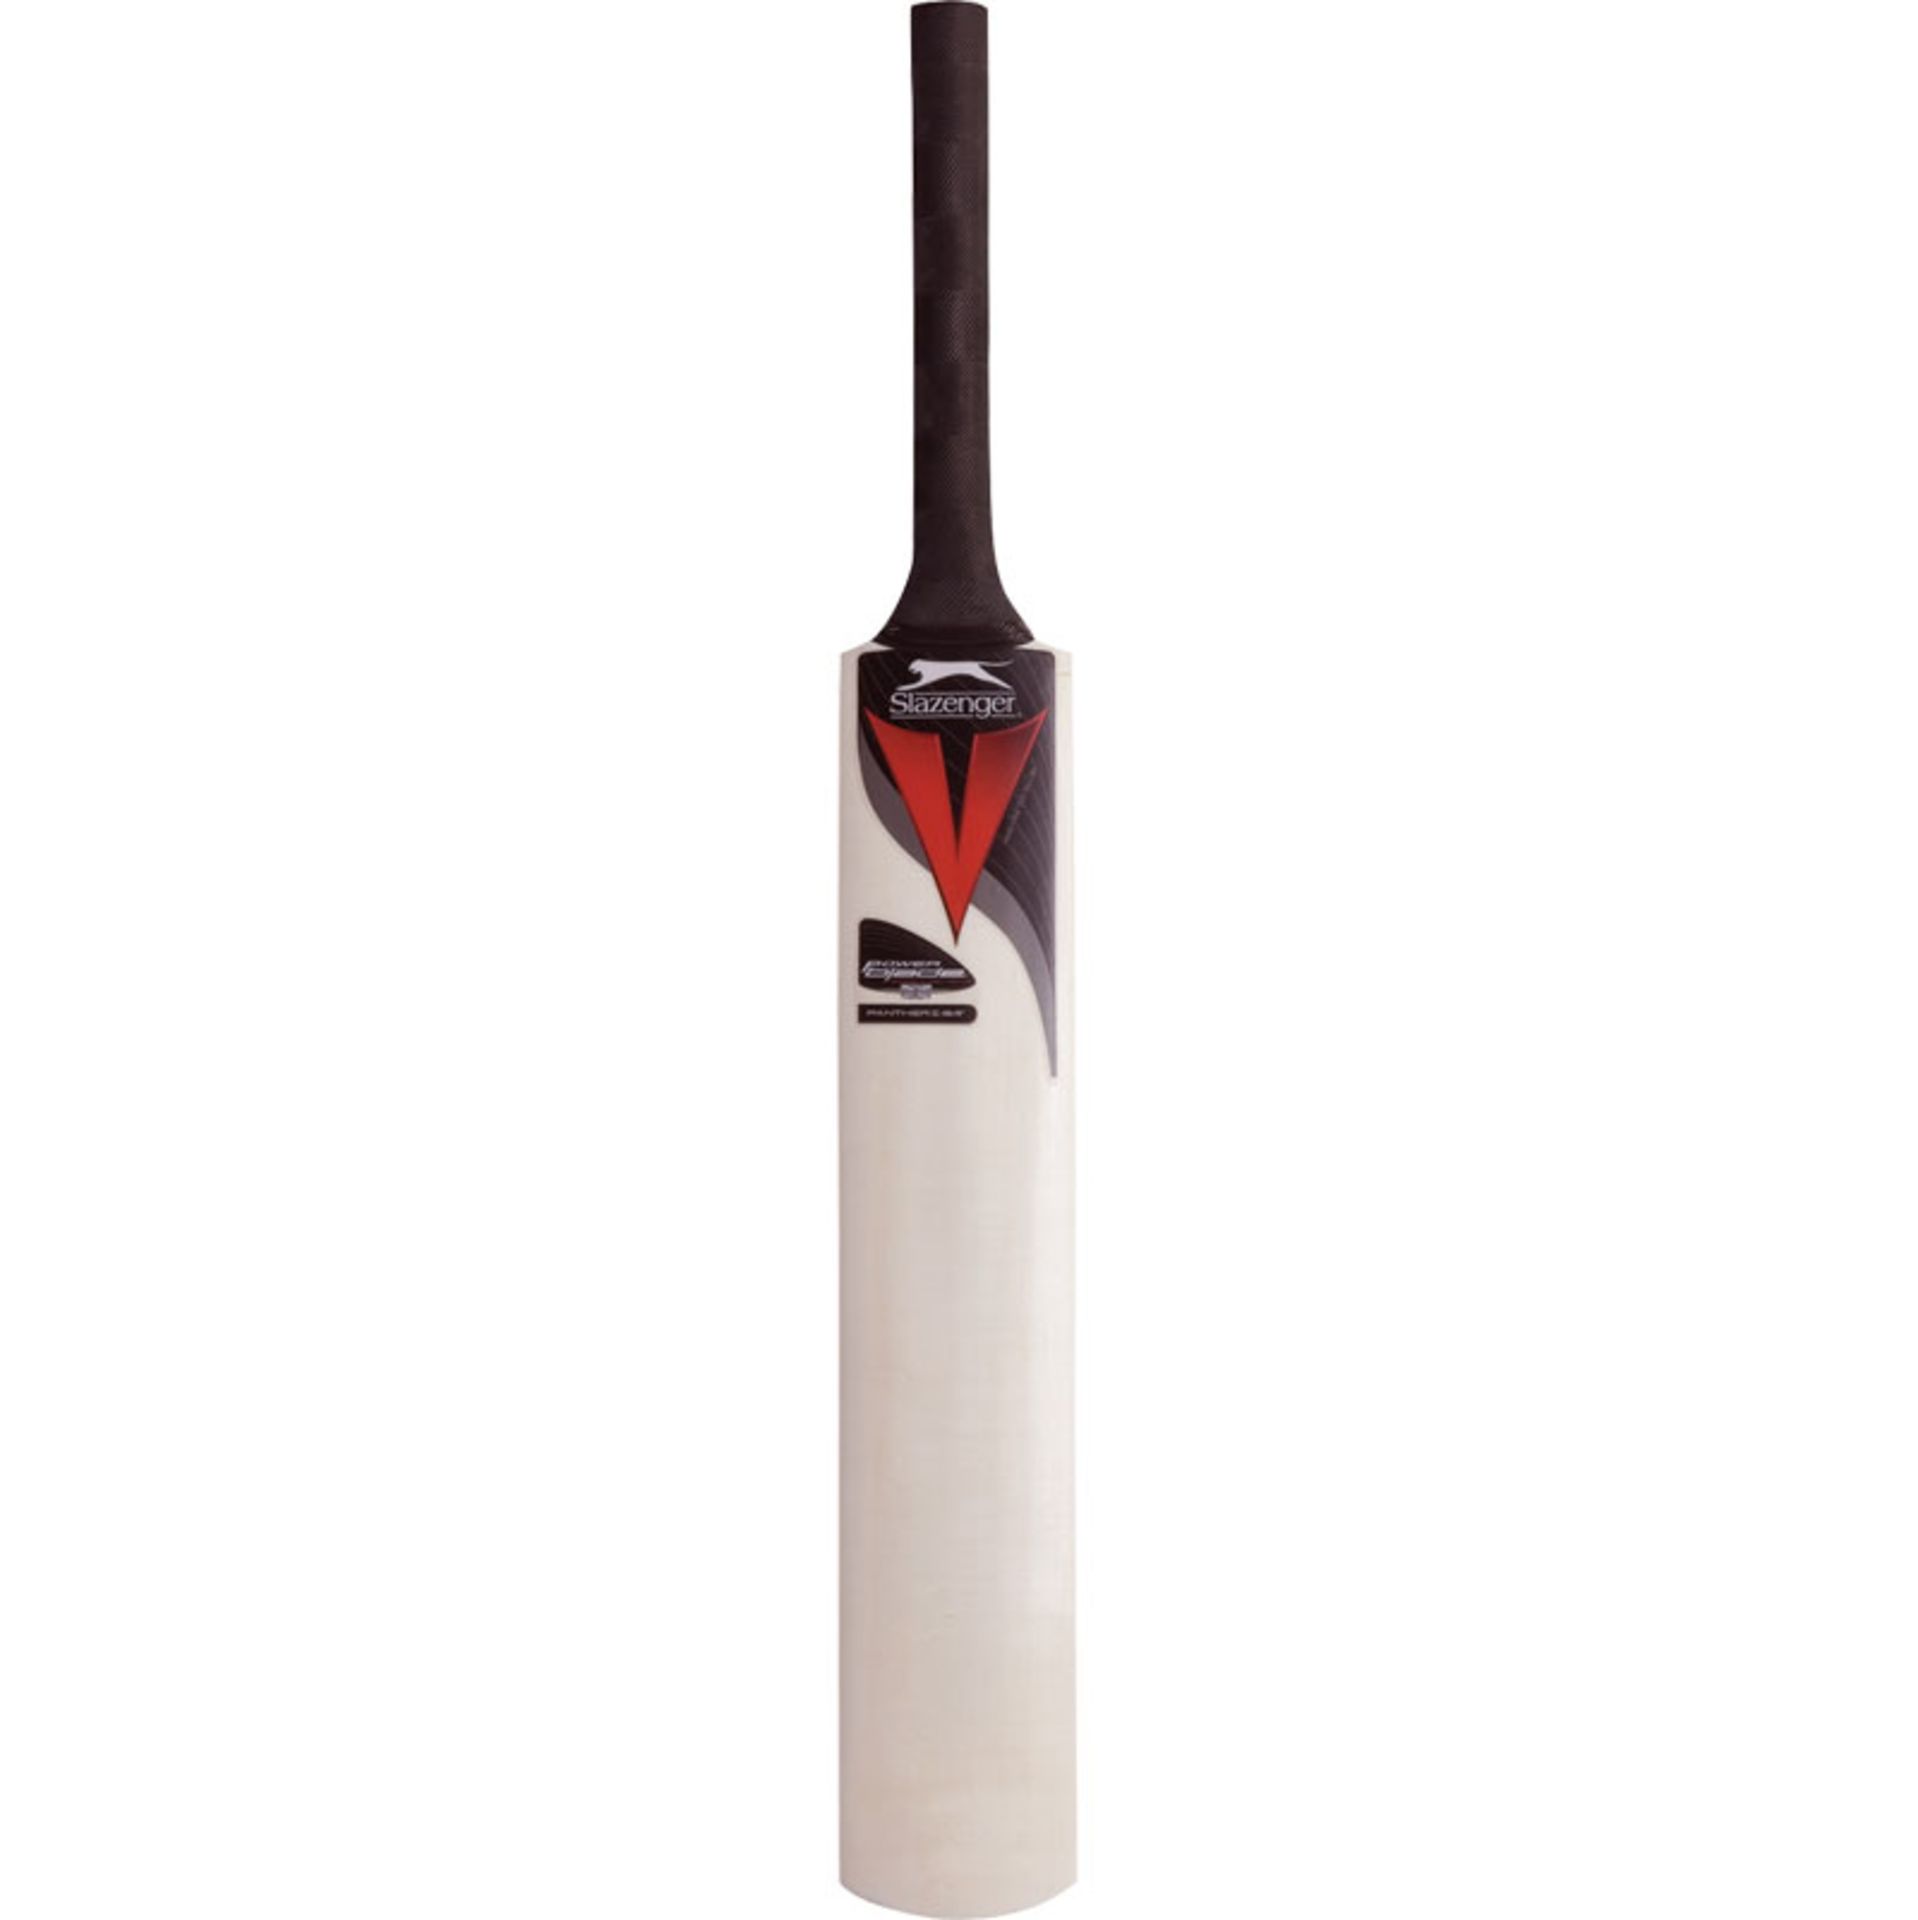 V Brand New Slazenger Power Blade Panther I-Bat Cricket Bat ISP £25.49 (ebay) X 2 YOUR BID PRICE